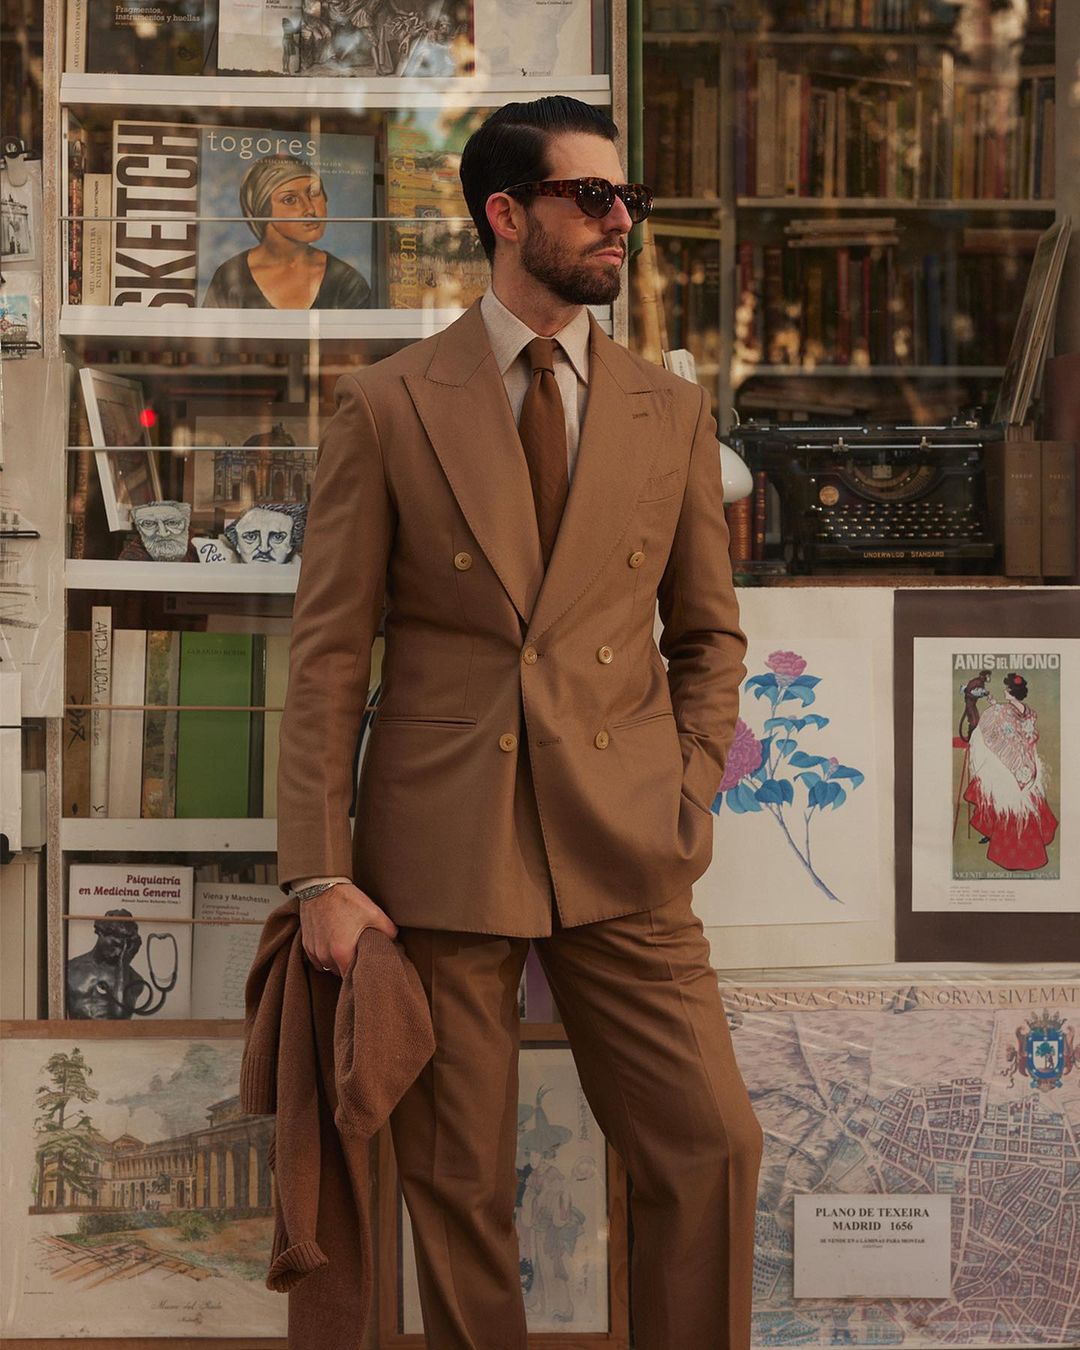 Vitale Barberis Canonico - Sand Wool Flannel Suit